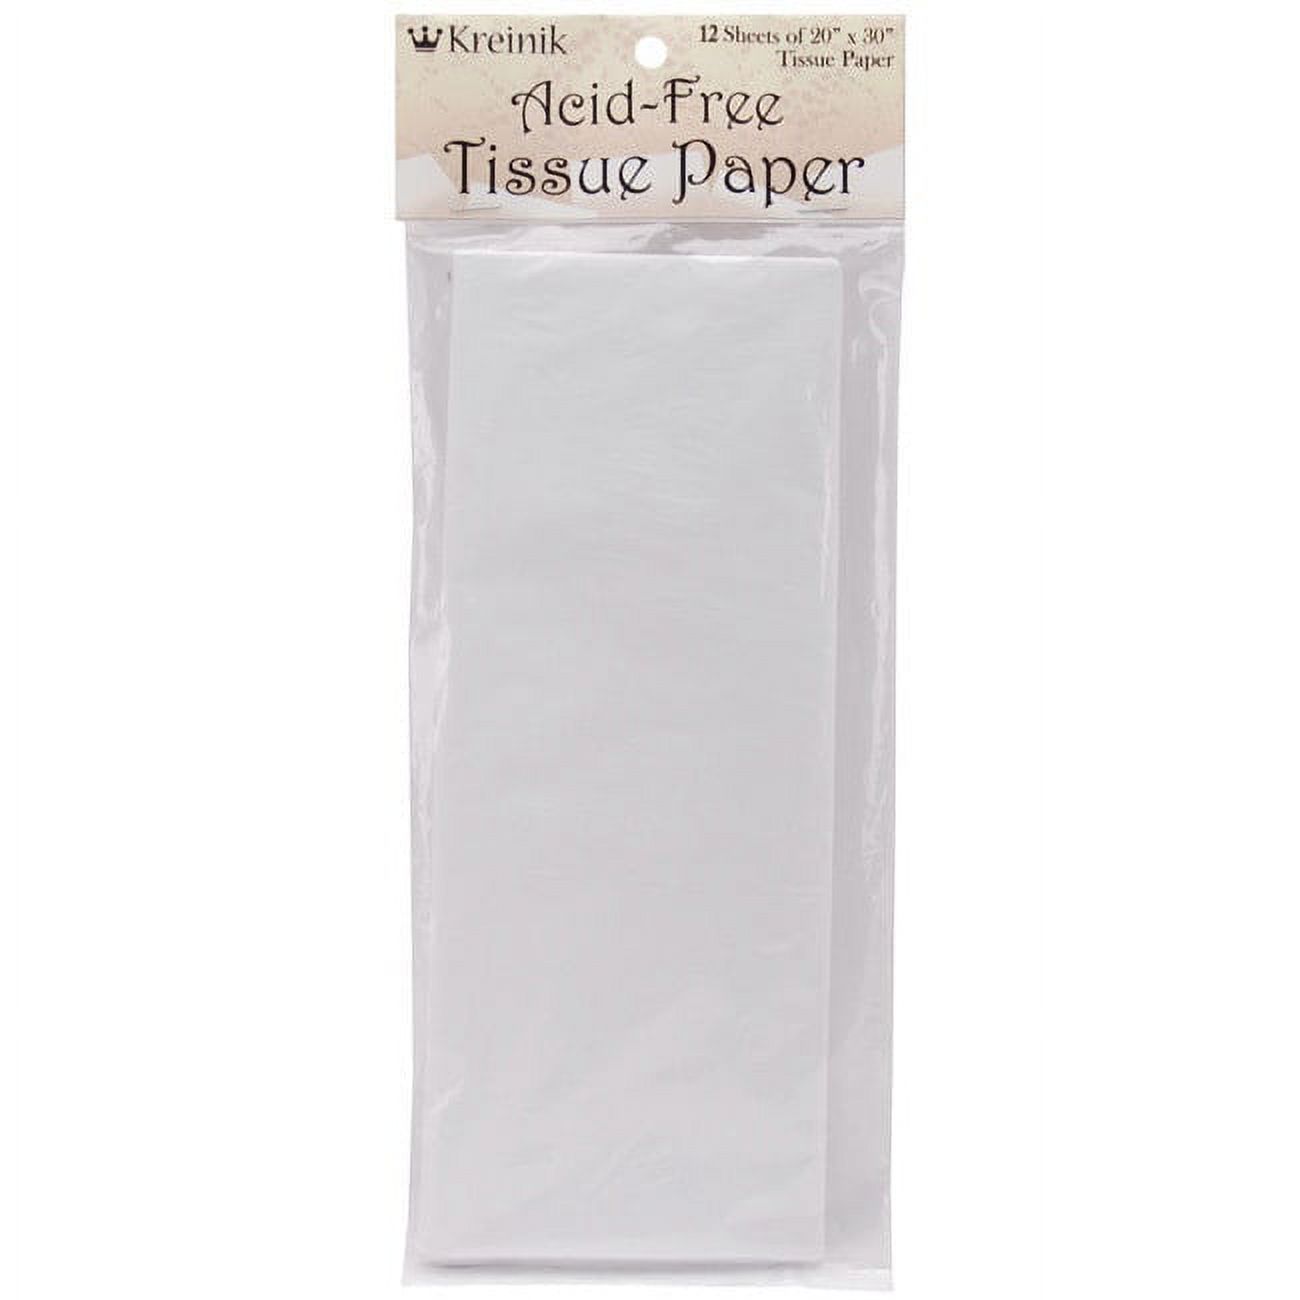 Kreinik Acid Free Tissue Paper 20x30 12 Pkg